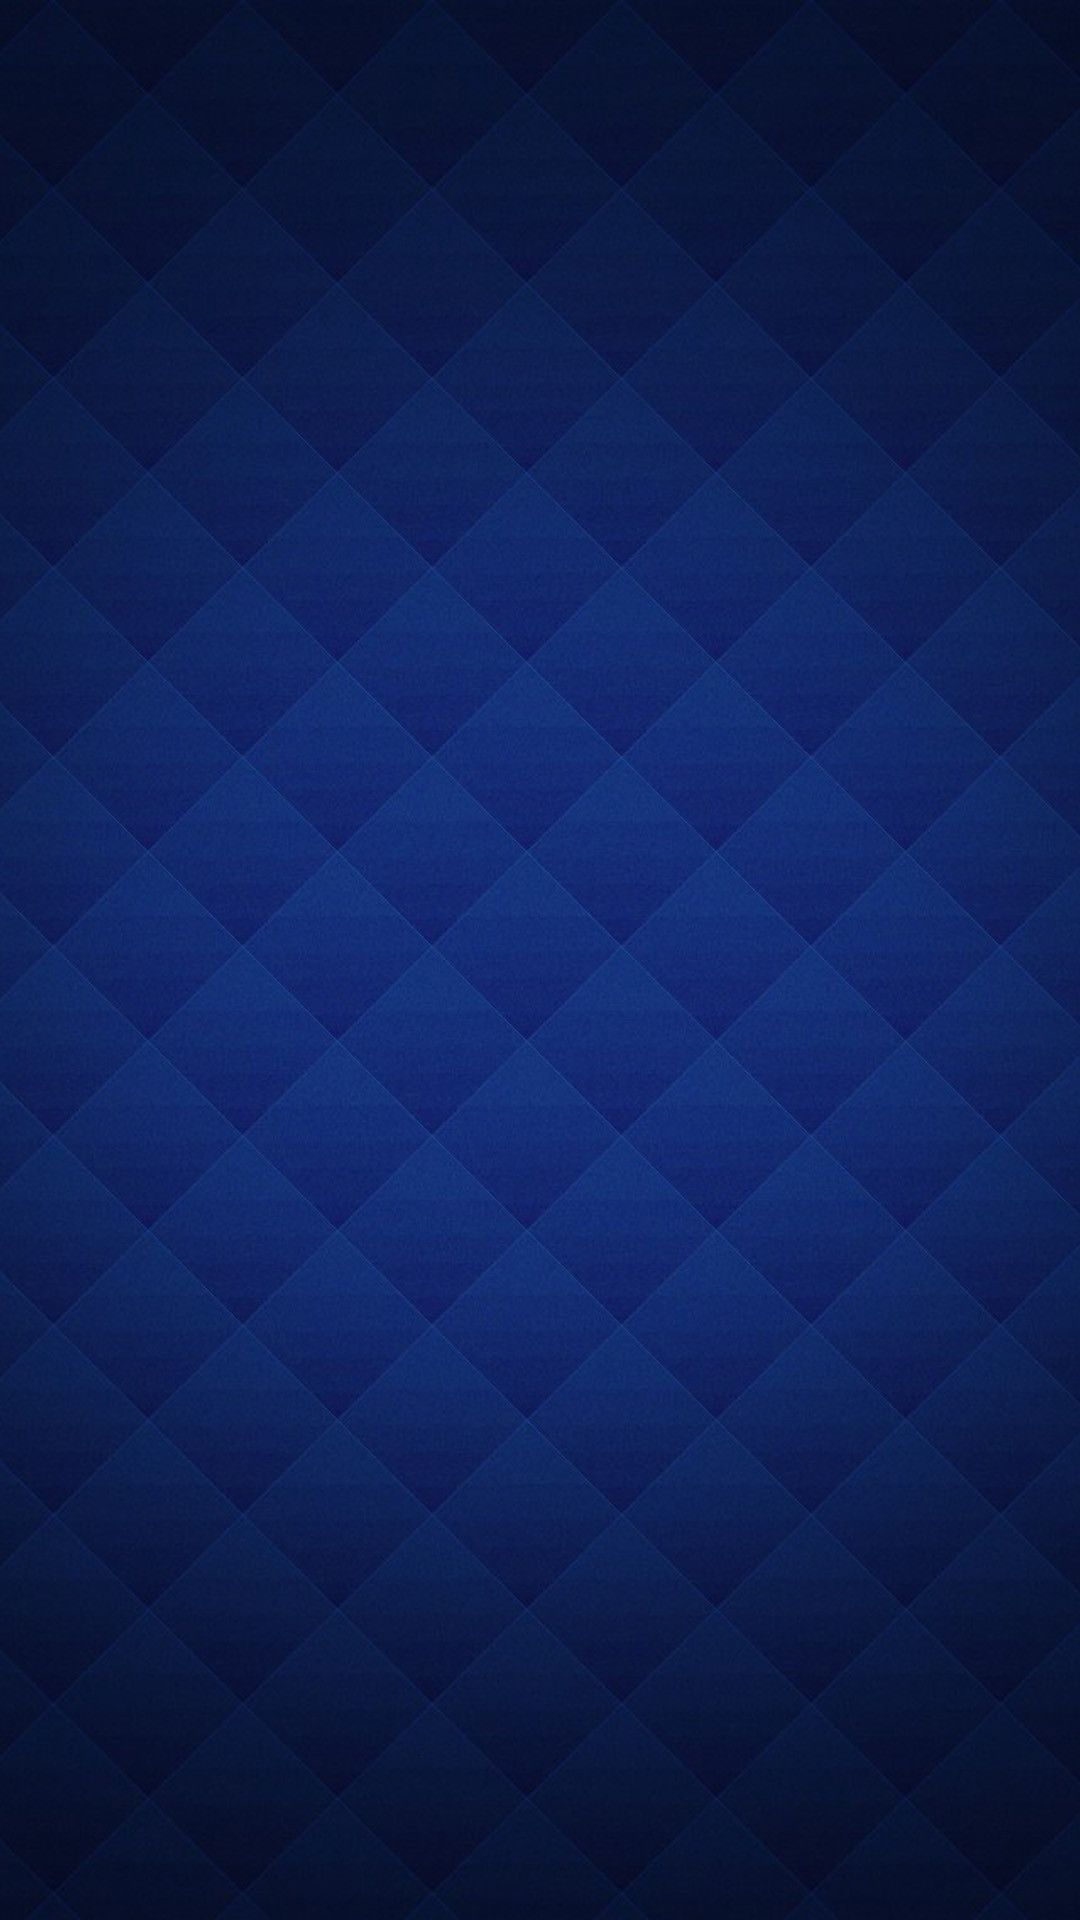 Royal Blue iPhone Wallpaper